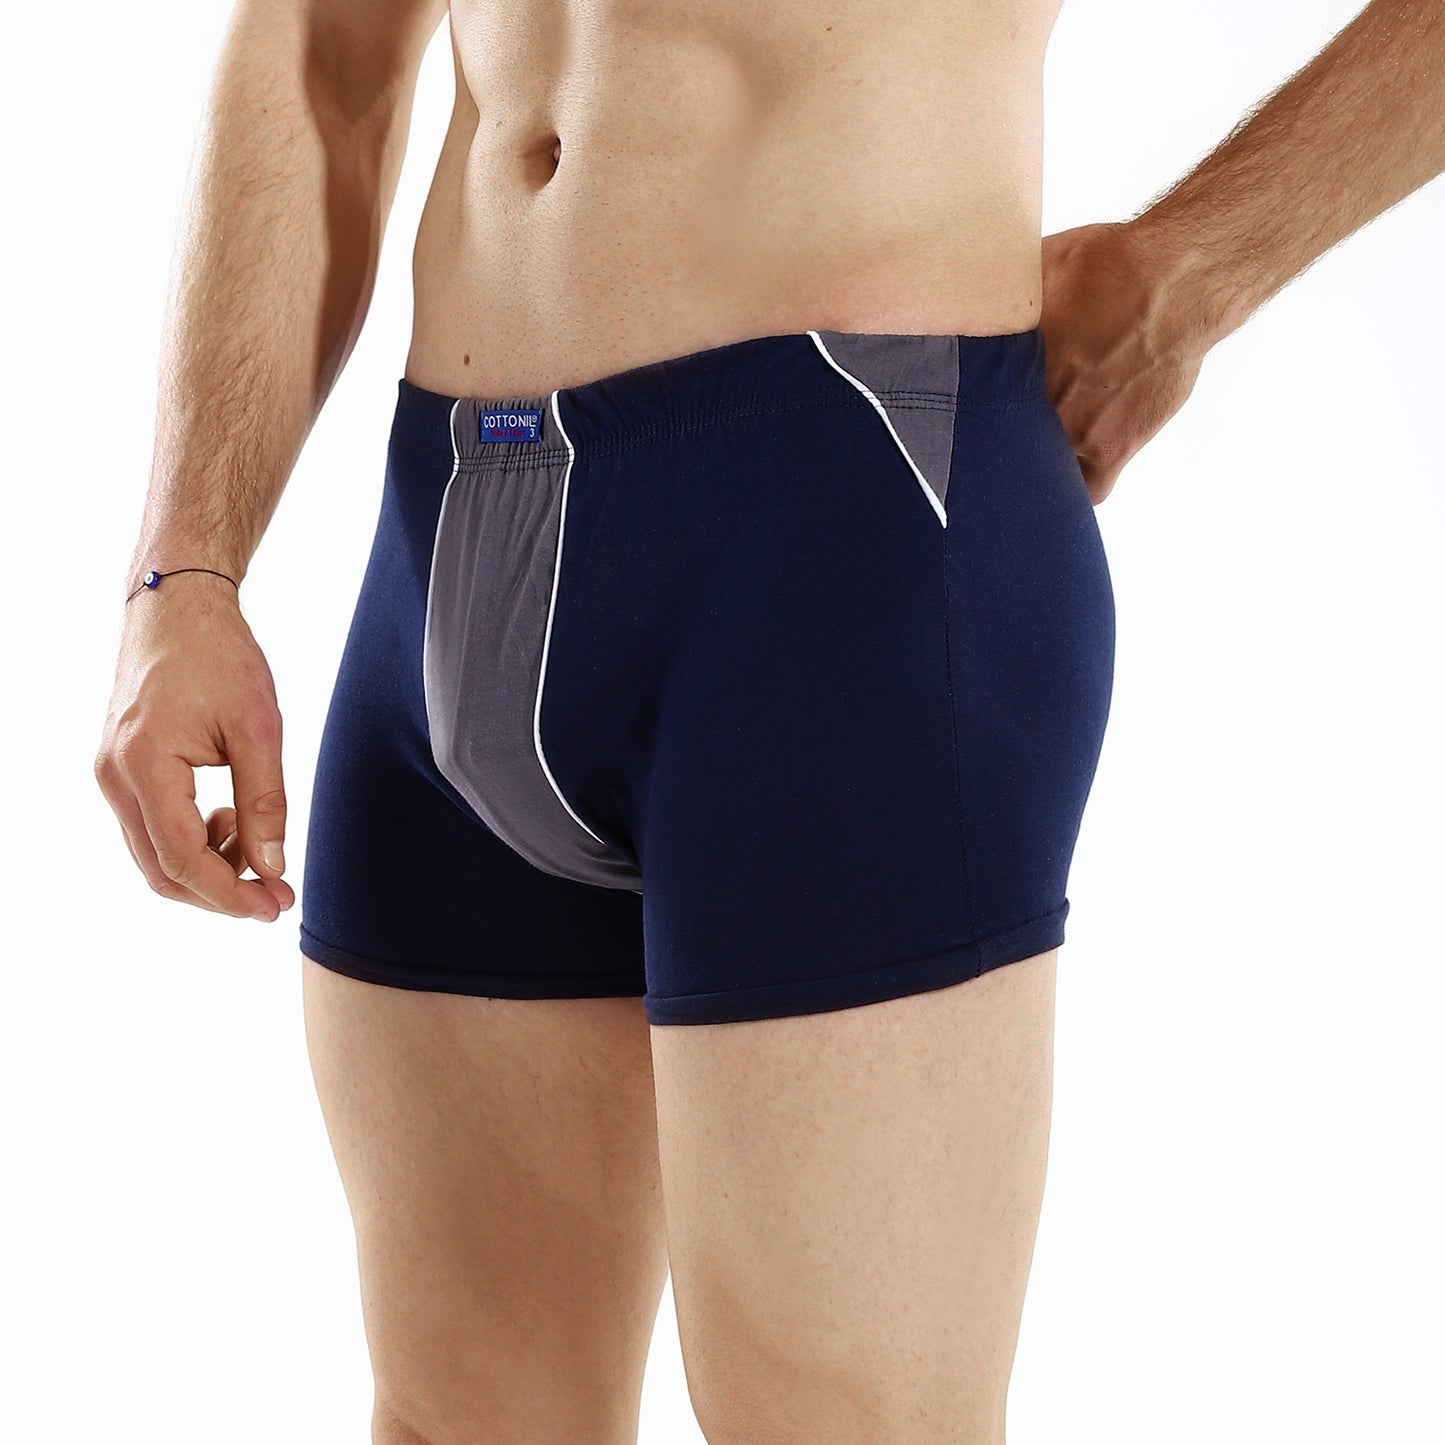 men's underwear "Boxer digital"